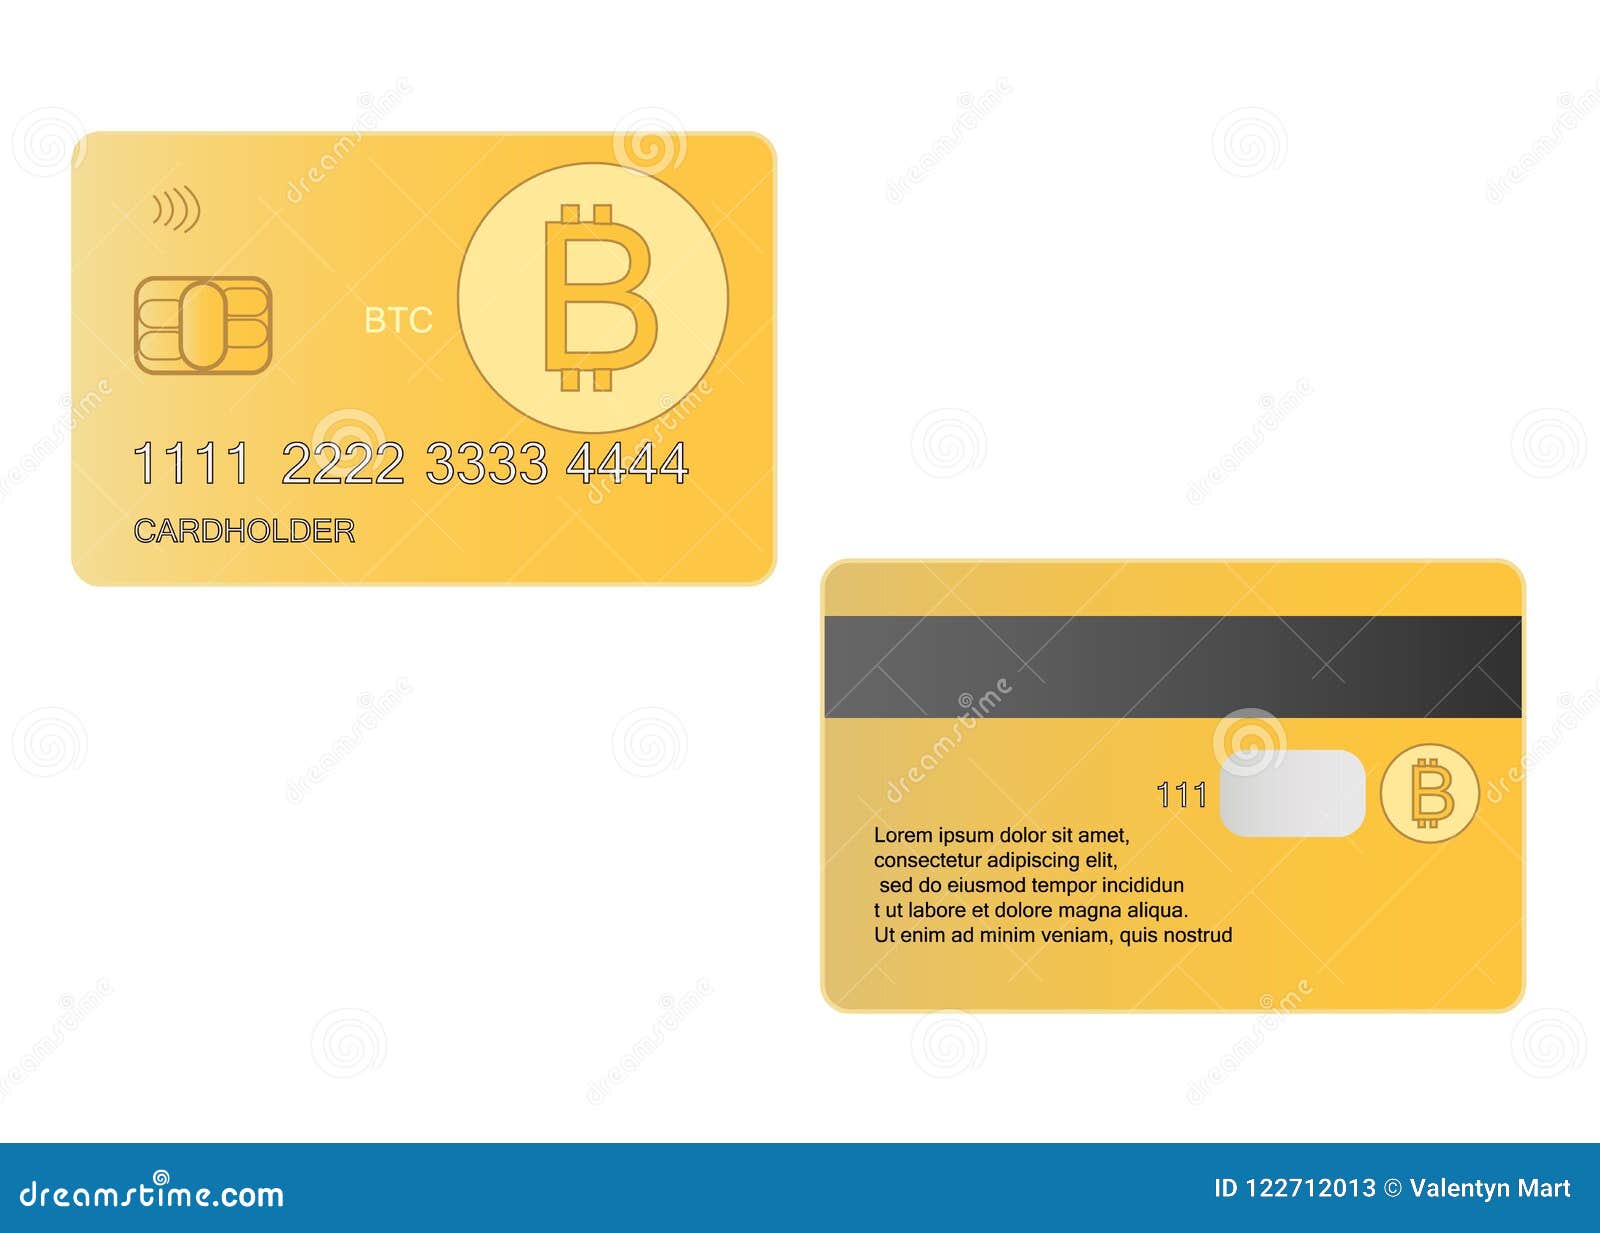 bitcoin bank card 1 btc la dzd